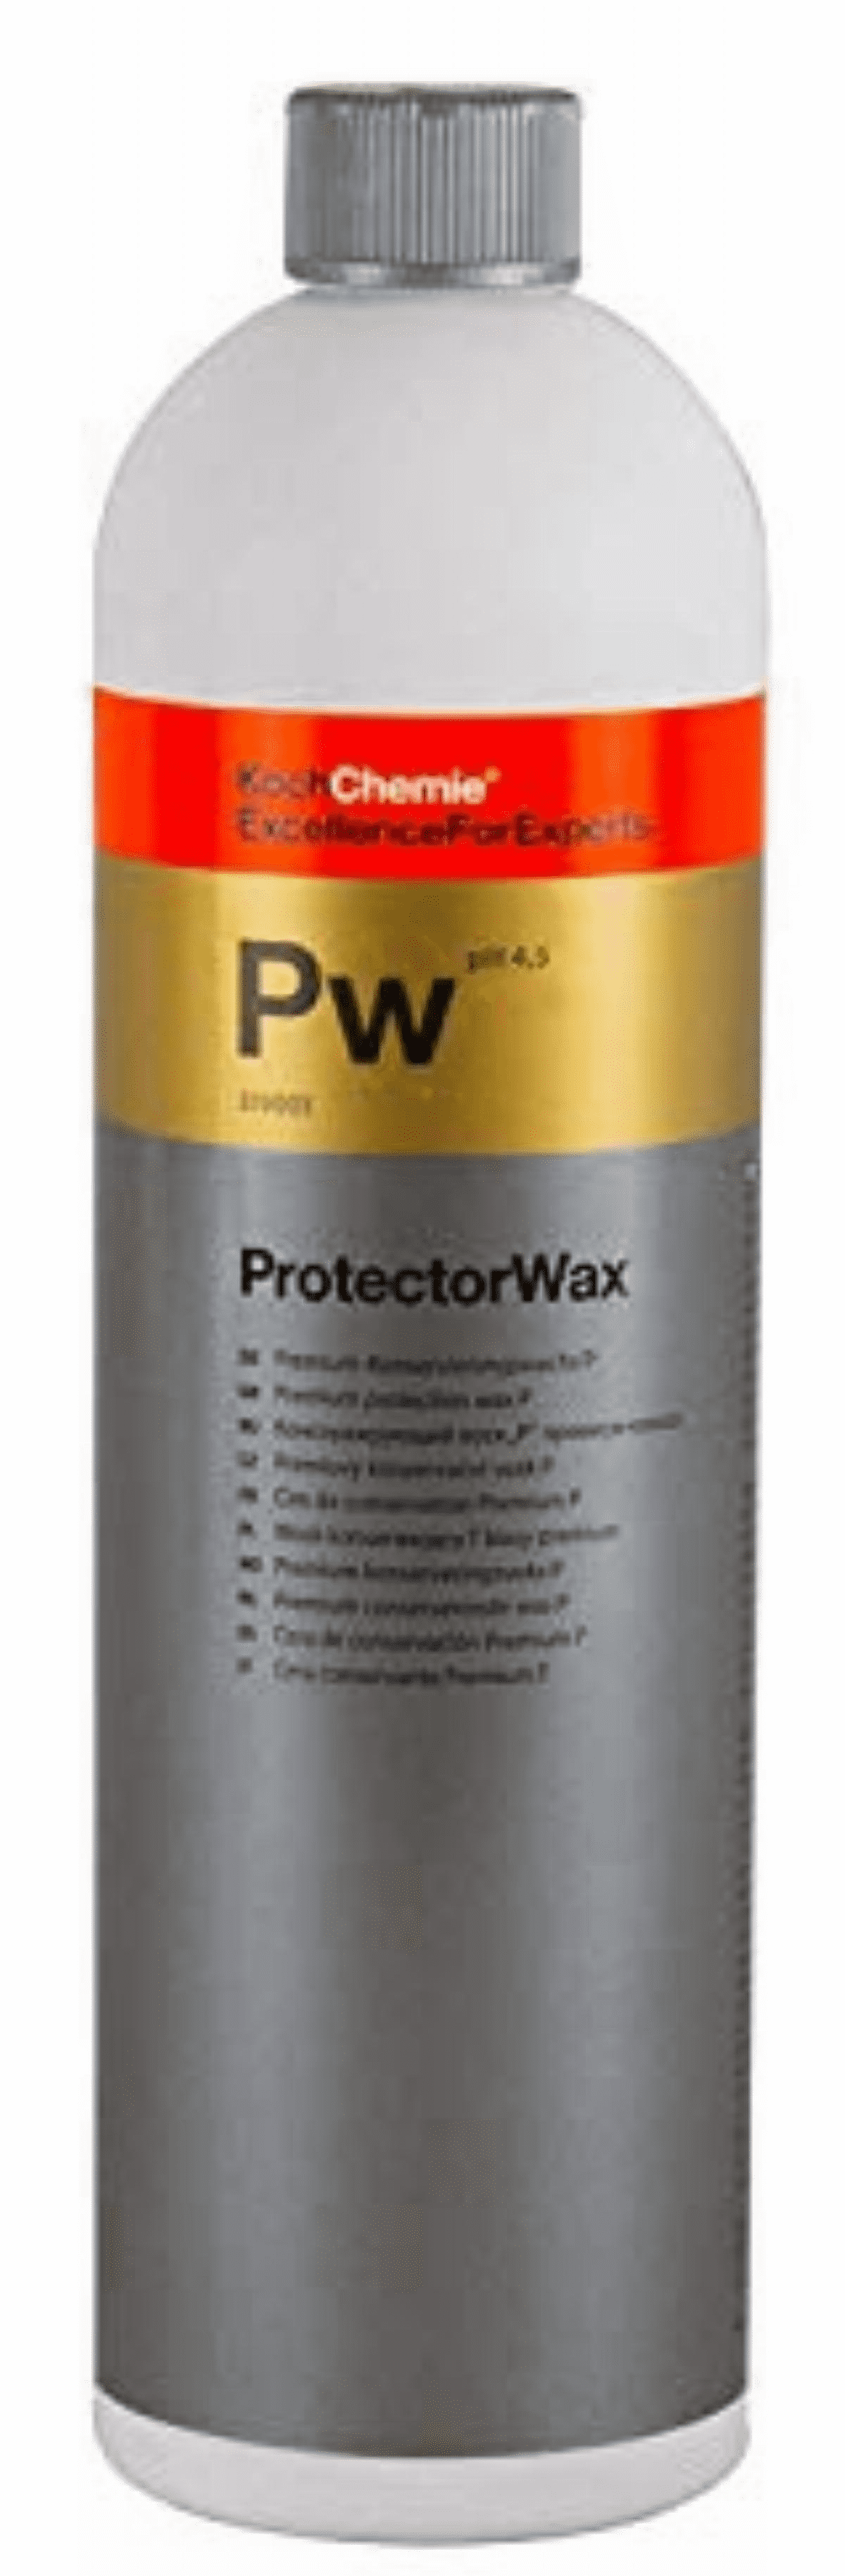 Koch Chemie PW ProtectorWax 1 Litre